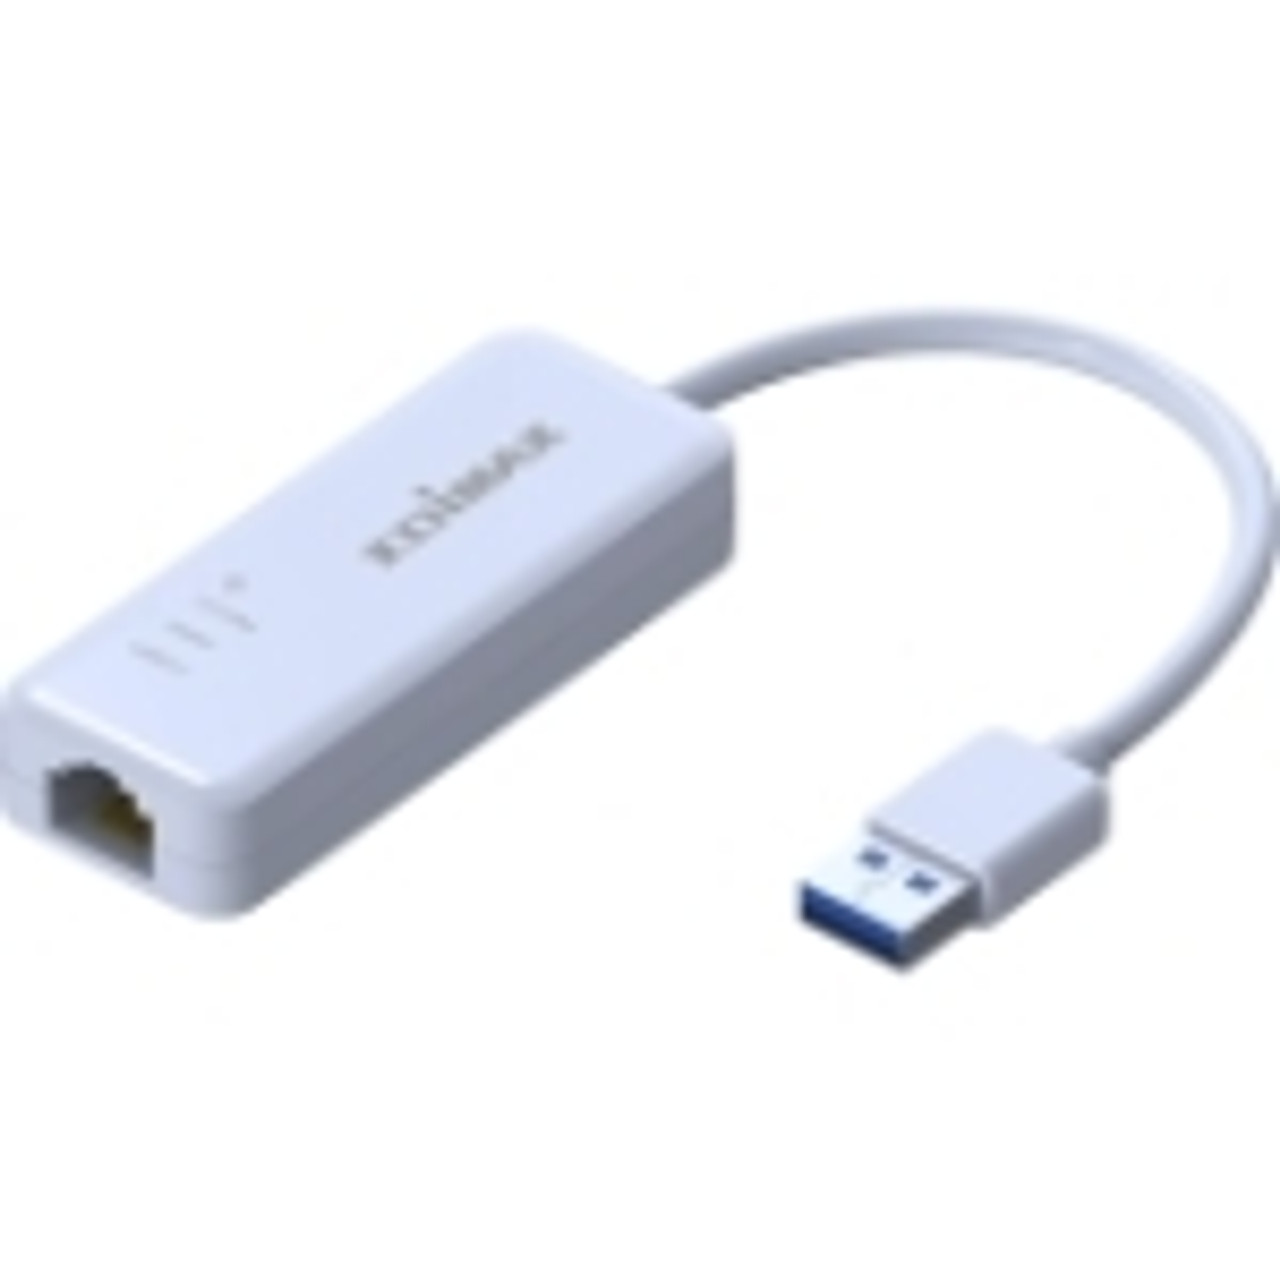 EU-4306 Edimax USB 3.0 Gigabit Ethernet Adapter USB 1 Port(s) 1 x Network (RJ-45) Twisted Pair